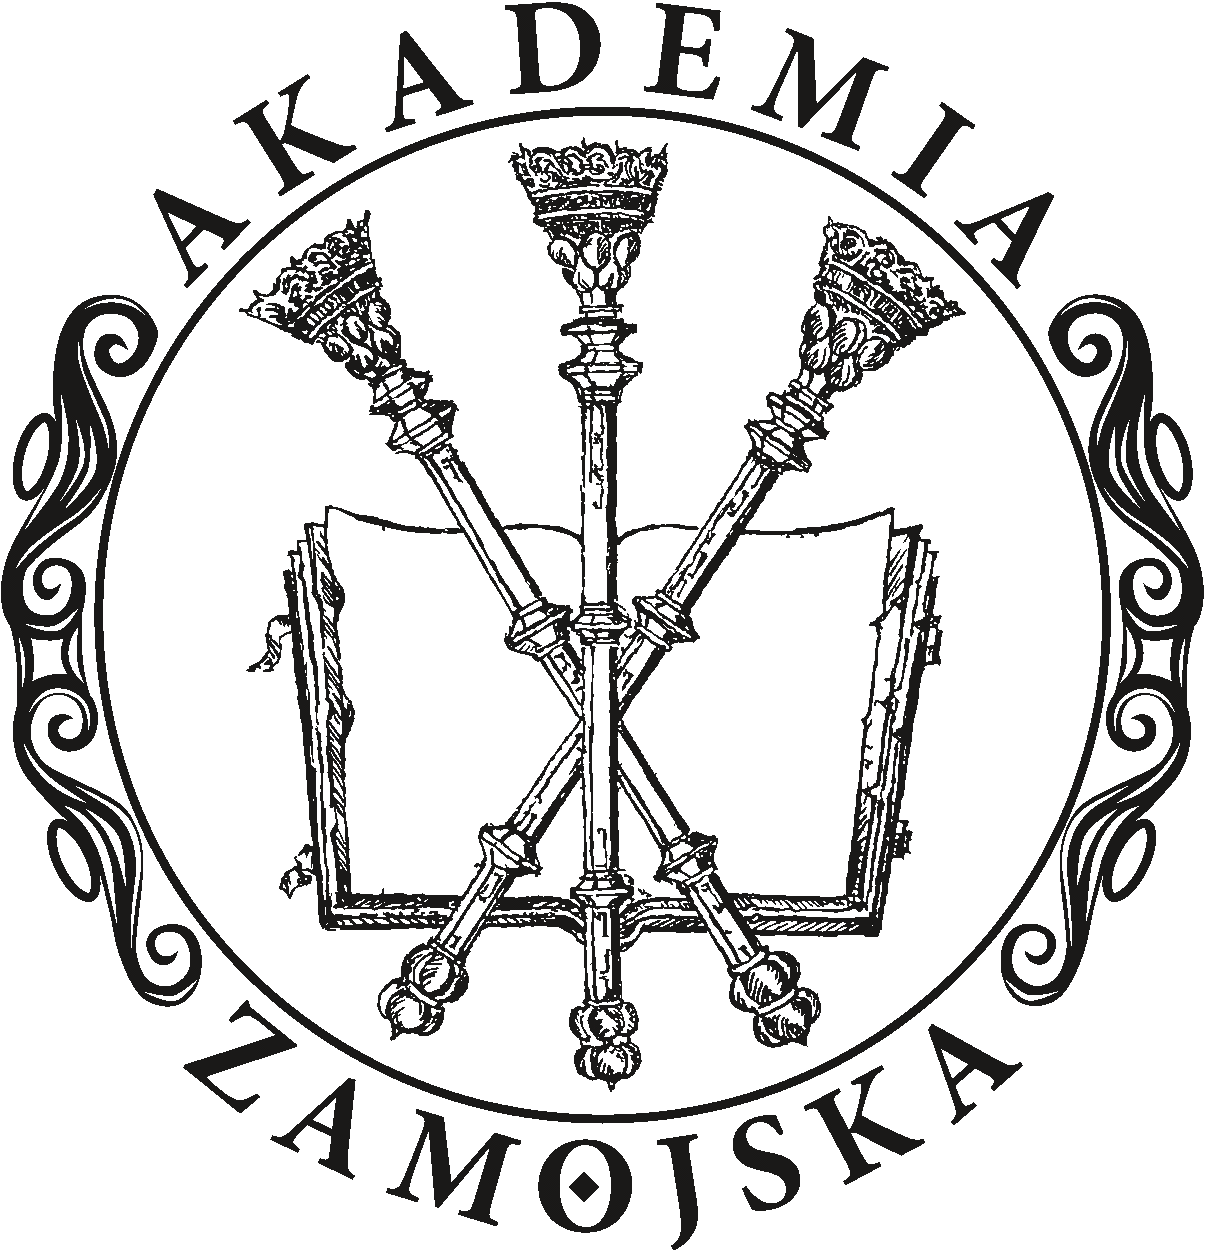 Akademia Zamojska logo